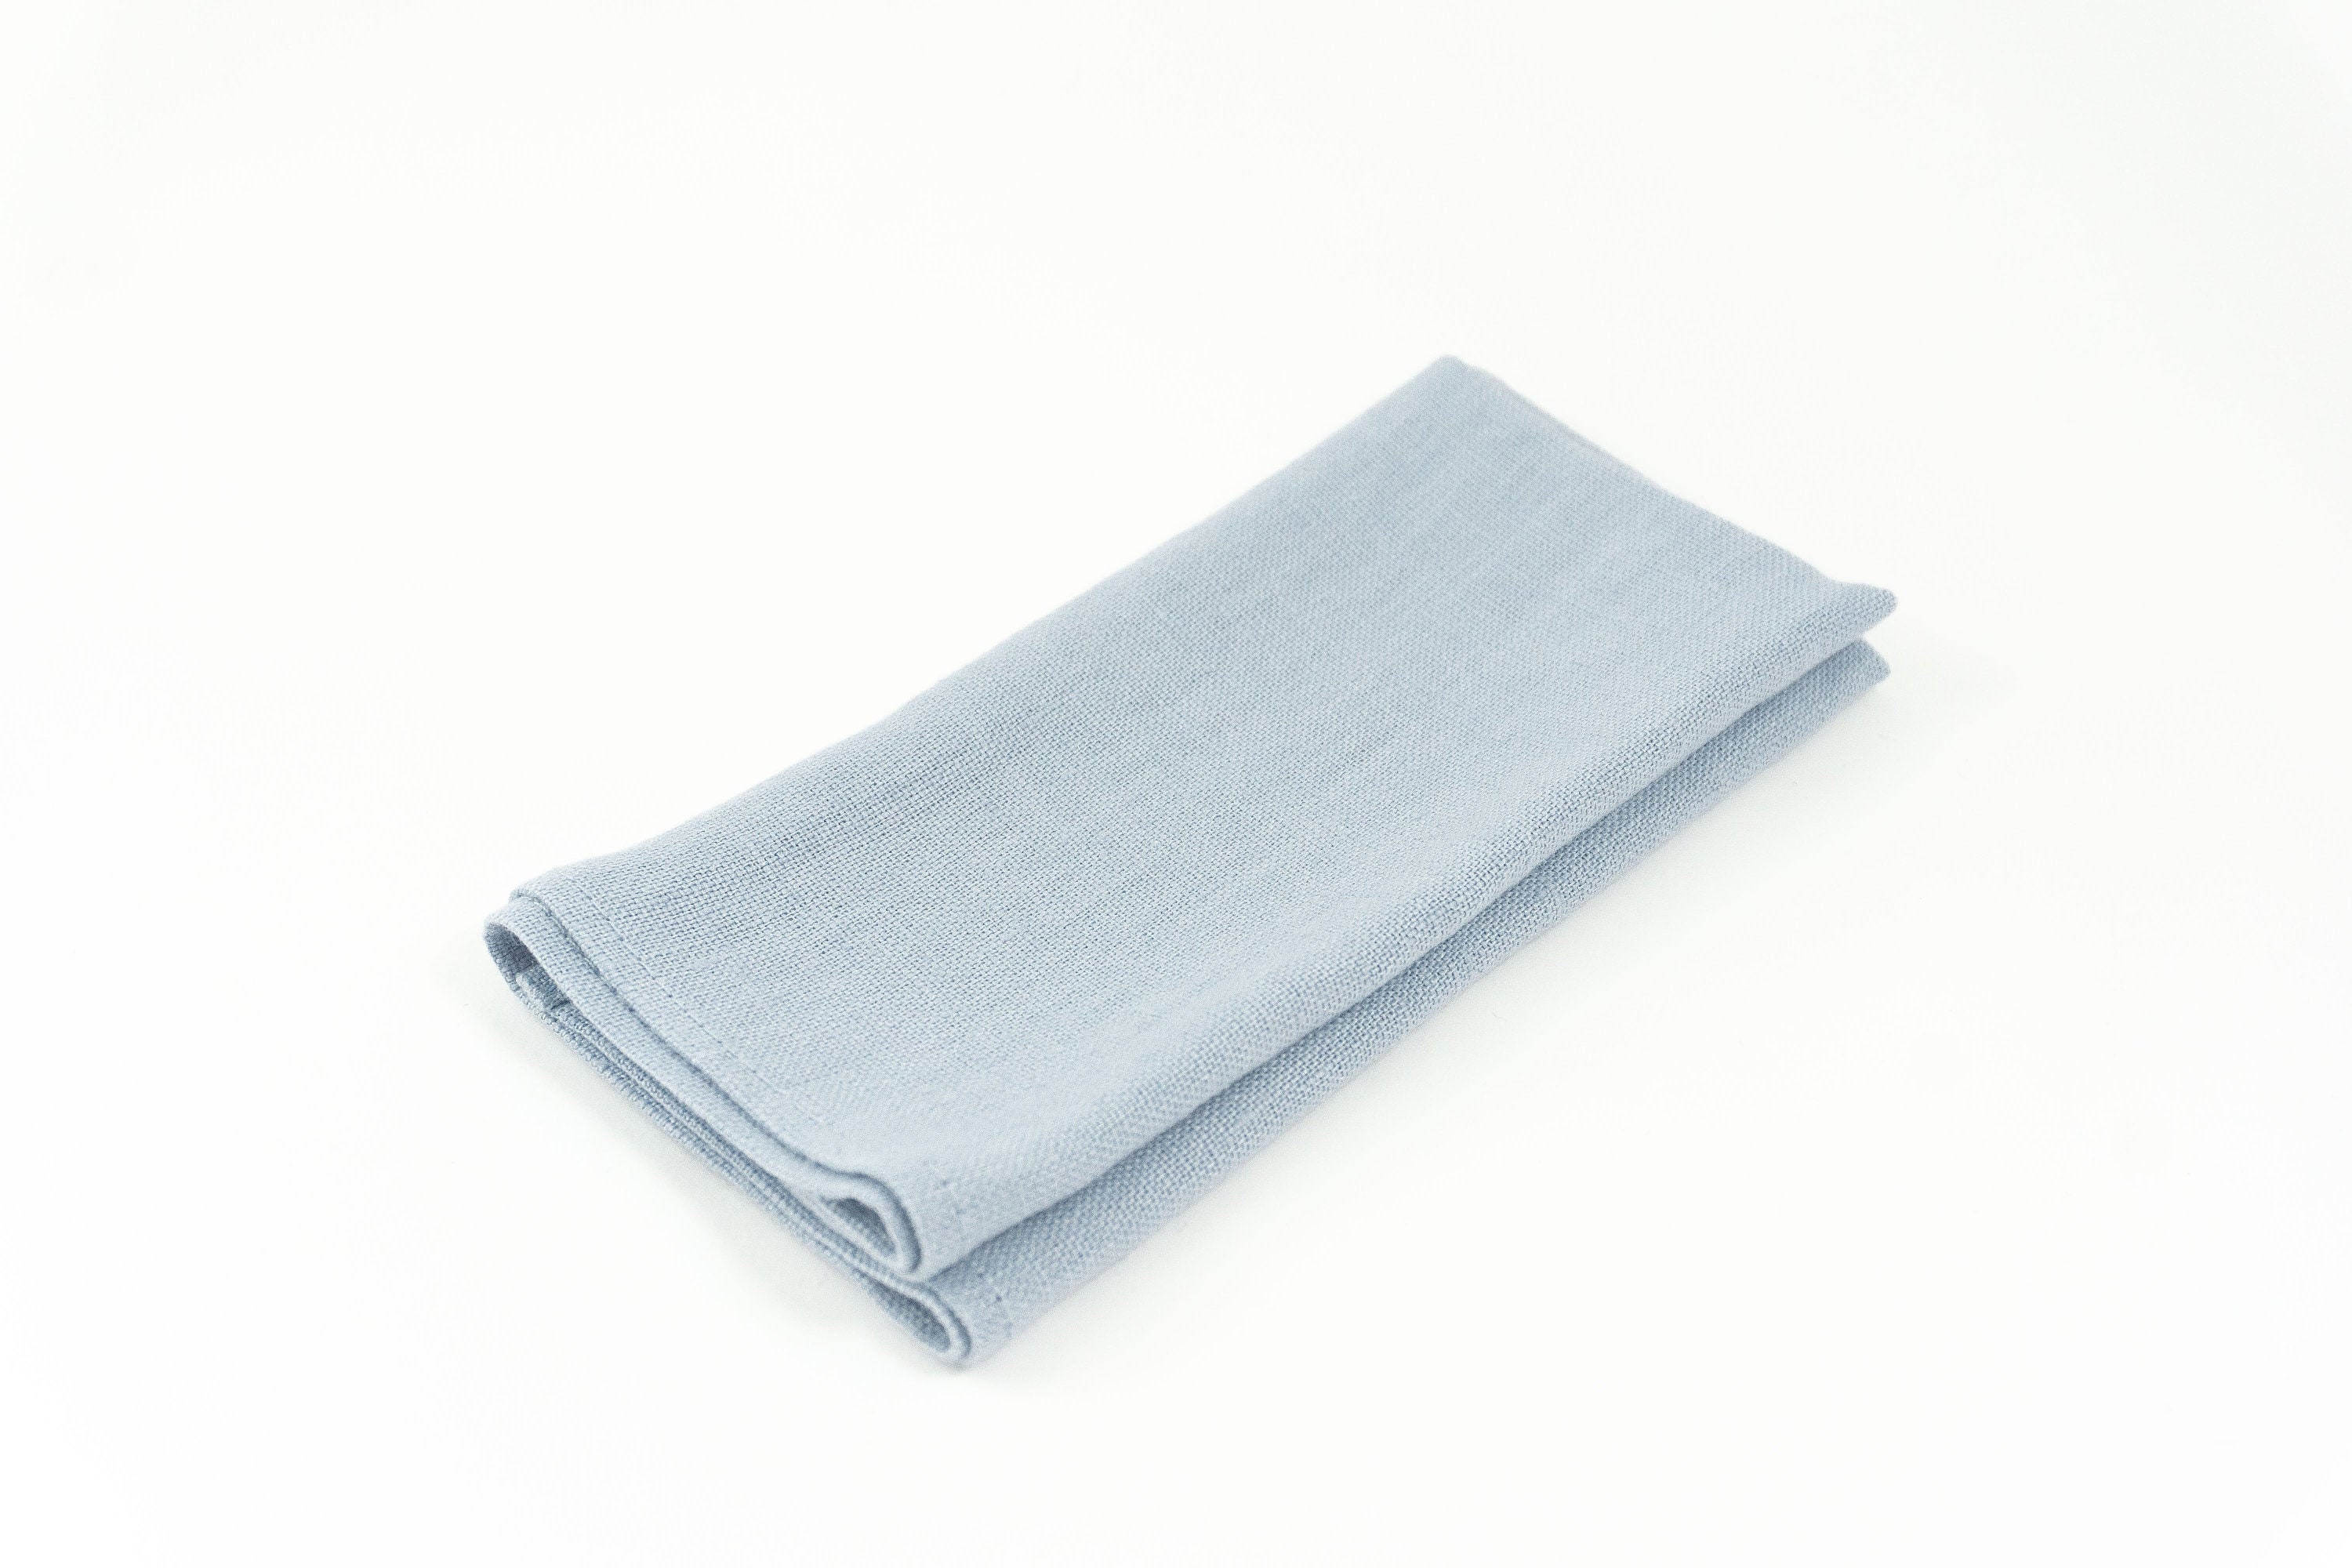 Dusty Blue Color Linen Pocket Square or Handkerchief for Men | Etsy